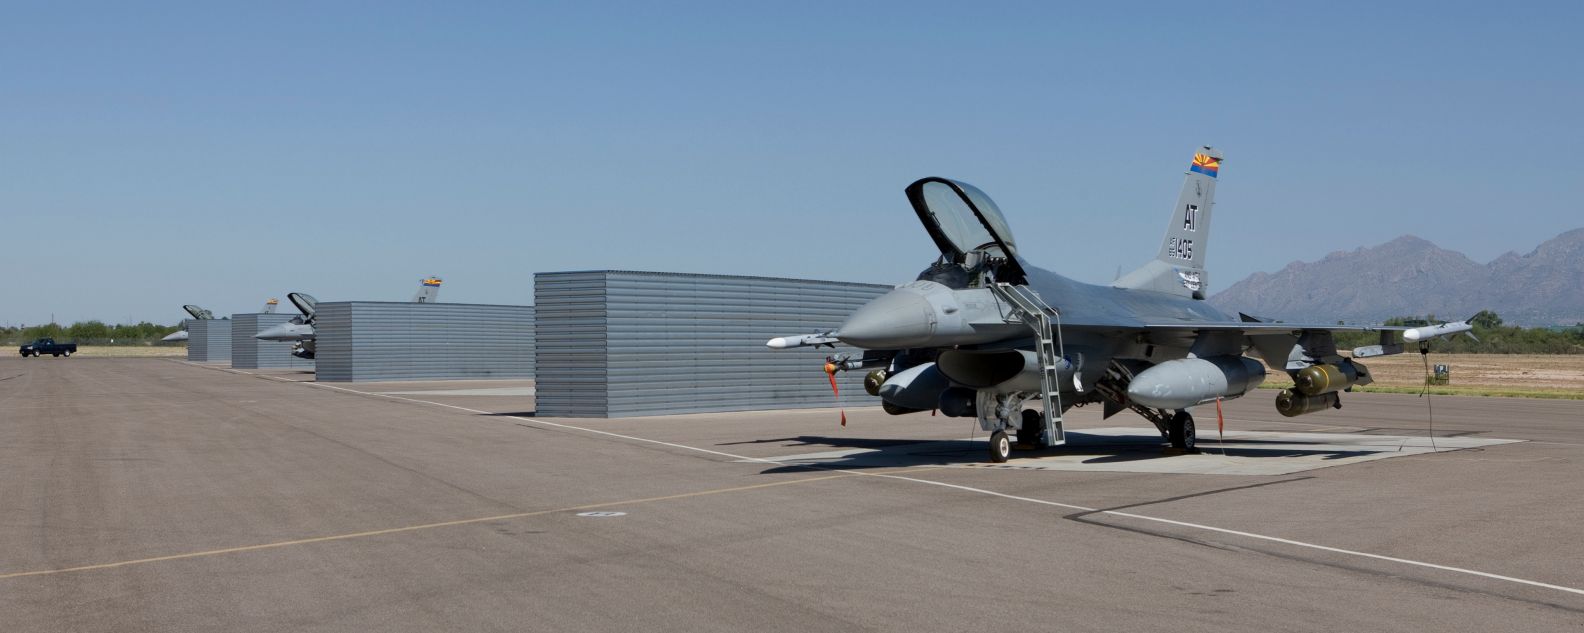 Tre F-16 dell'Air National Guard Air Force Reserve Test Center situati nei revetment della Davis-Monthan Air Force Base prima di una missione di prova